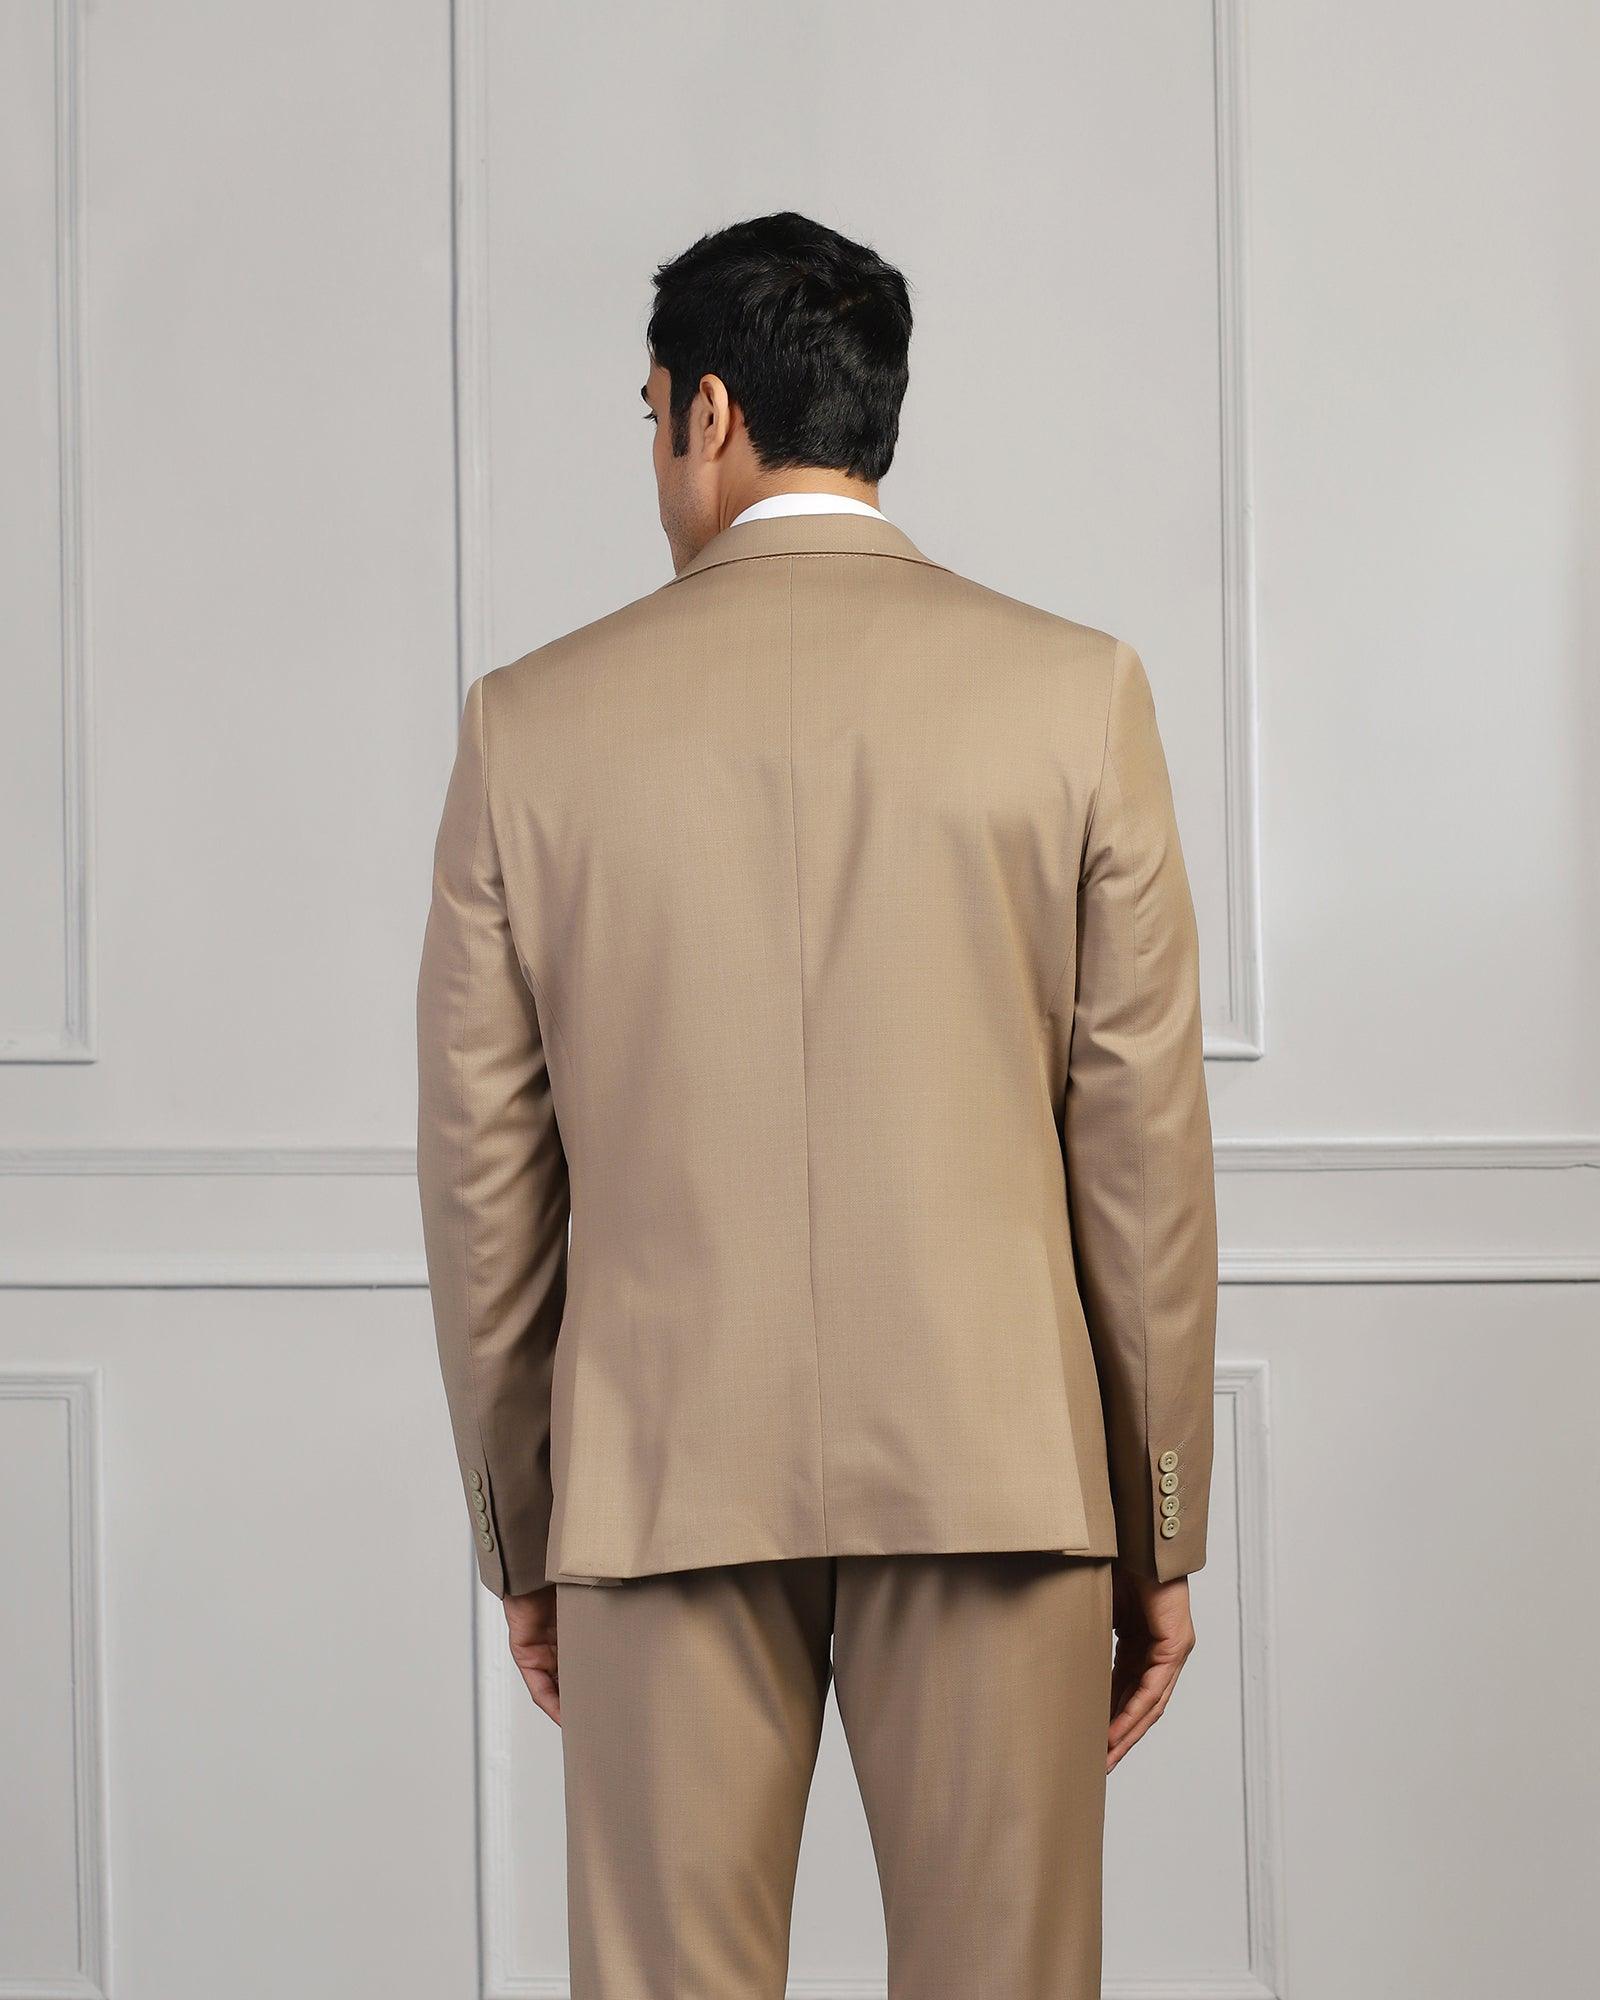 Three Piece Beige Solid Formal Suit - Beryl